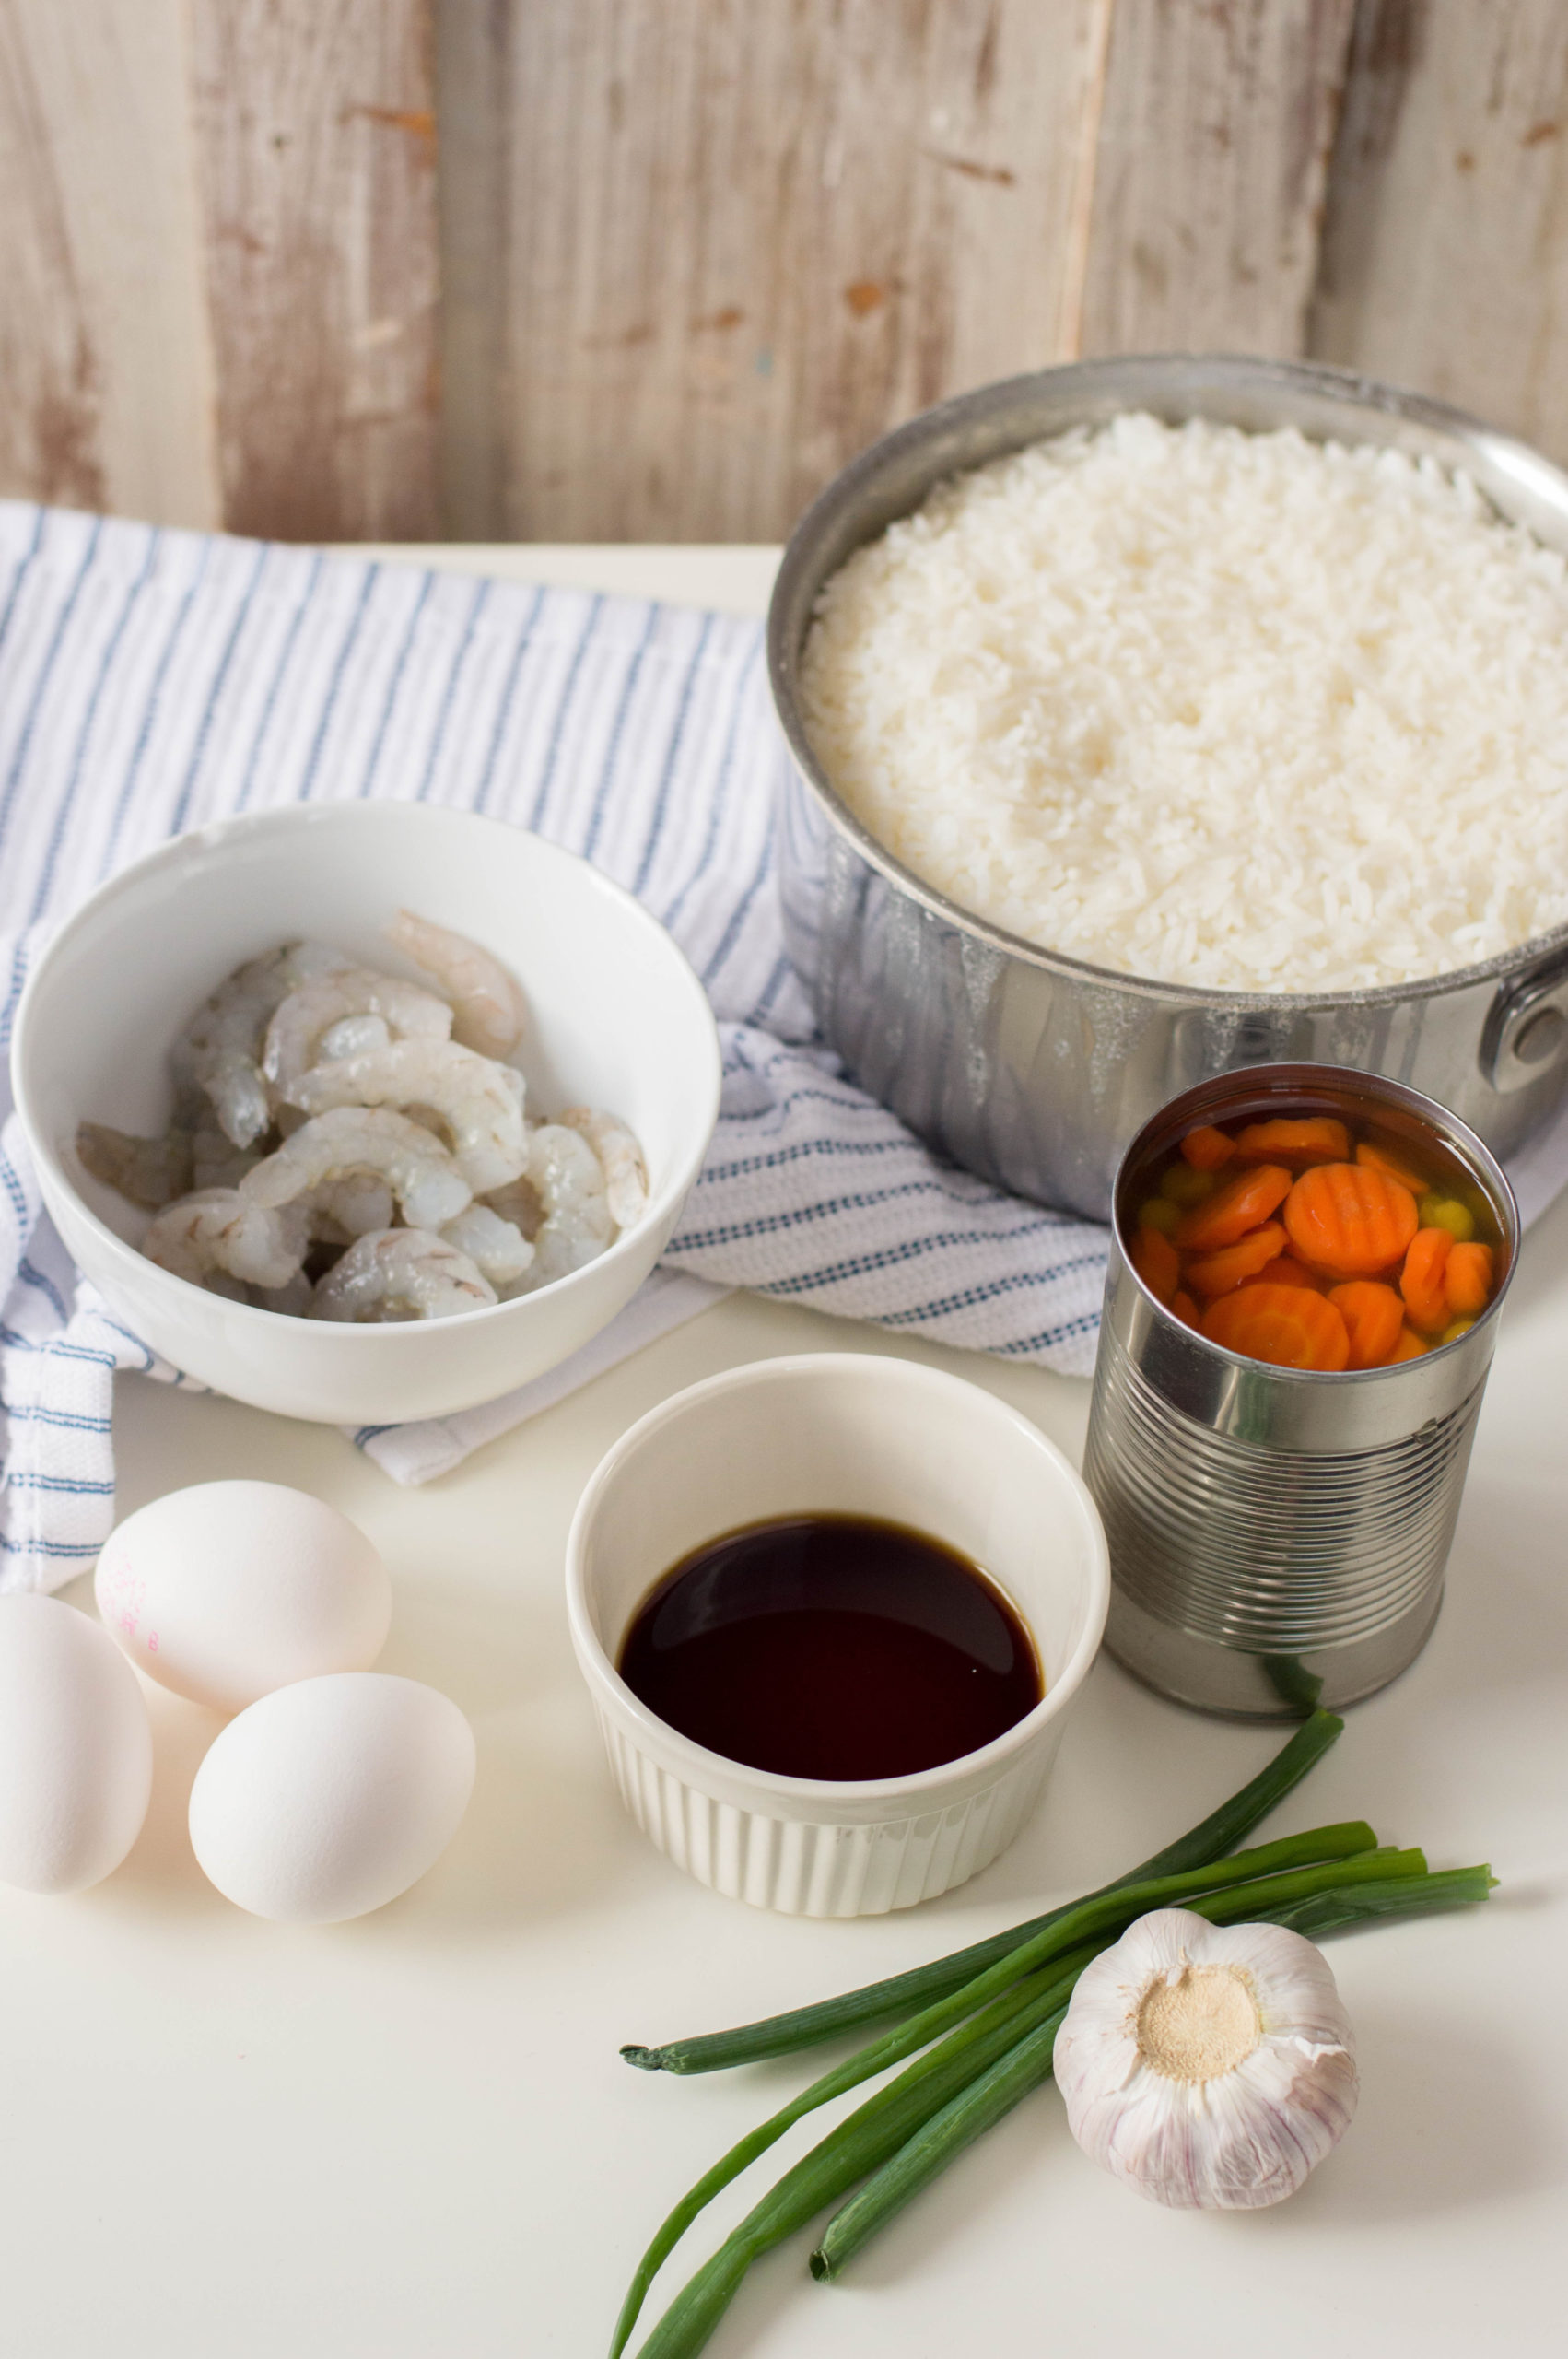 Shrimp, carrots eggs, rice and sauce for Shrimp Fried Rice.